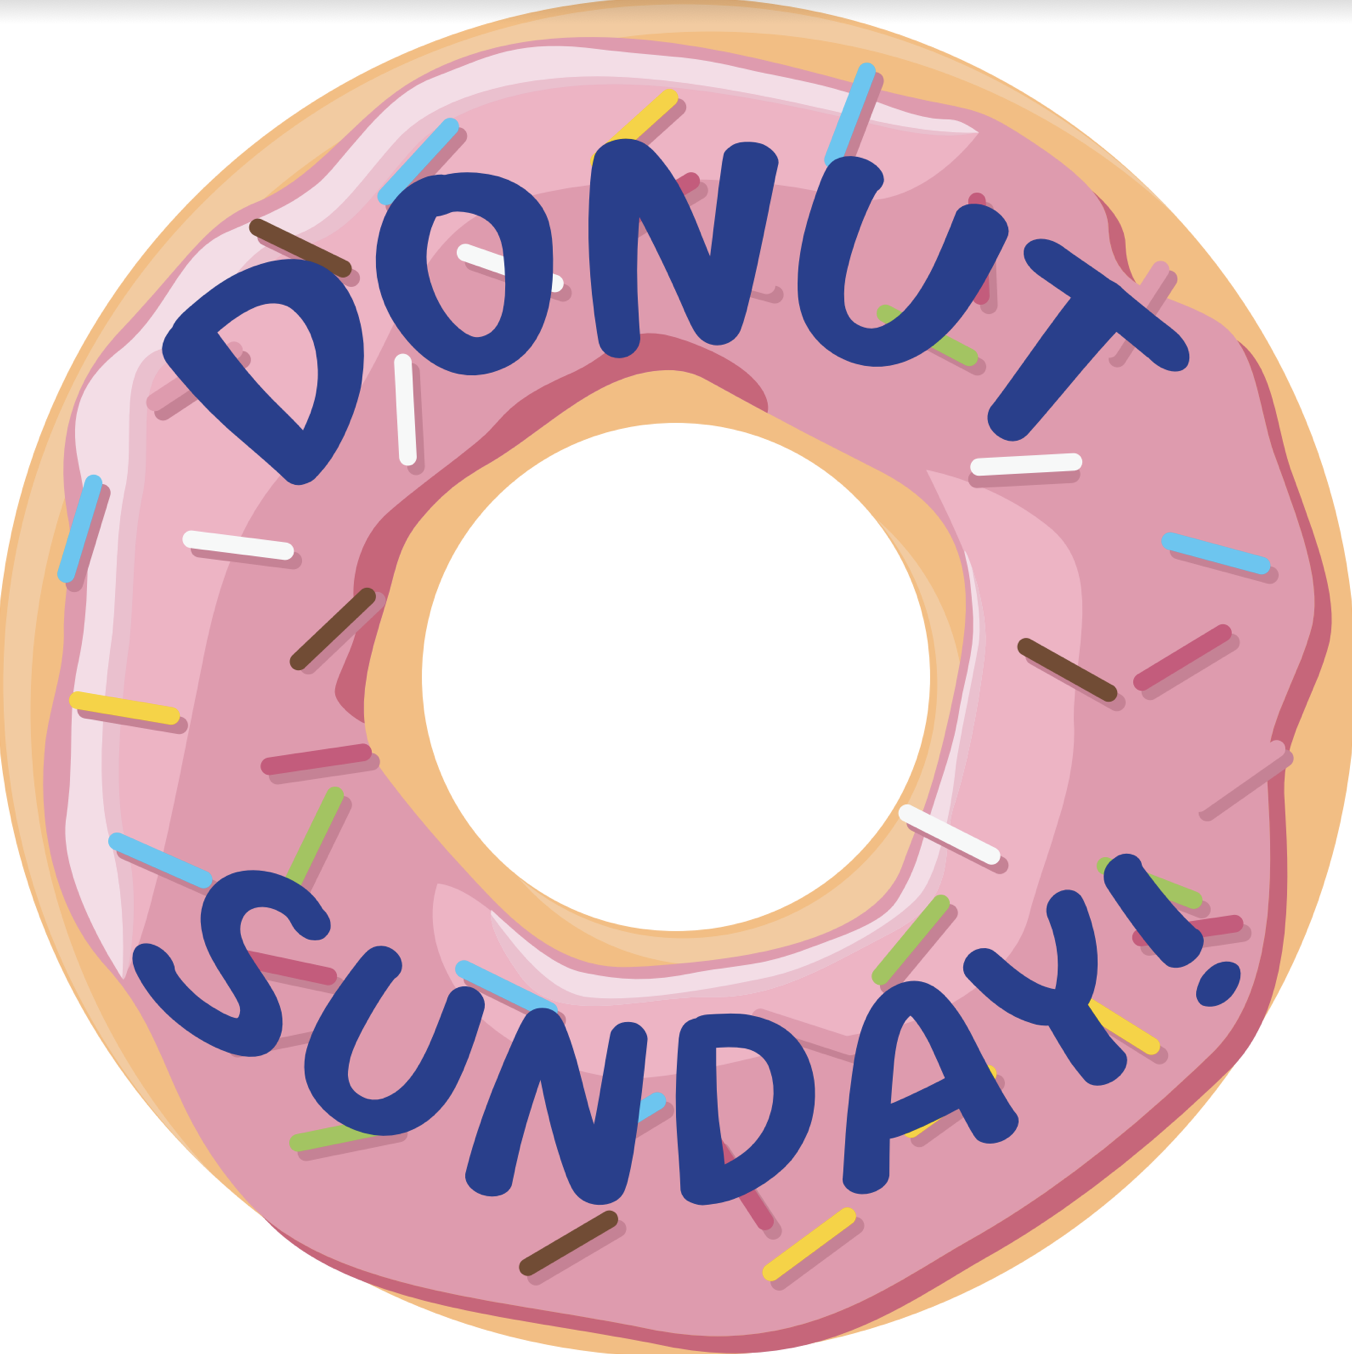 Donut Sunday @ Saint Theresa Church | Positive Encouraging K-LOVE